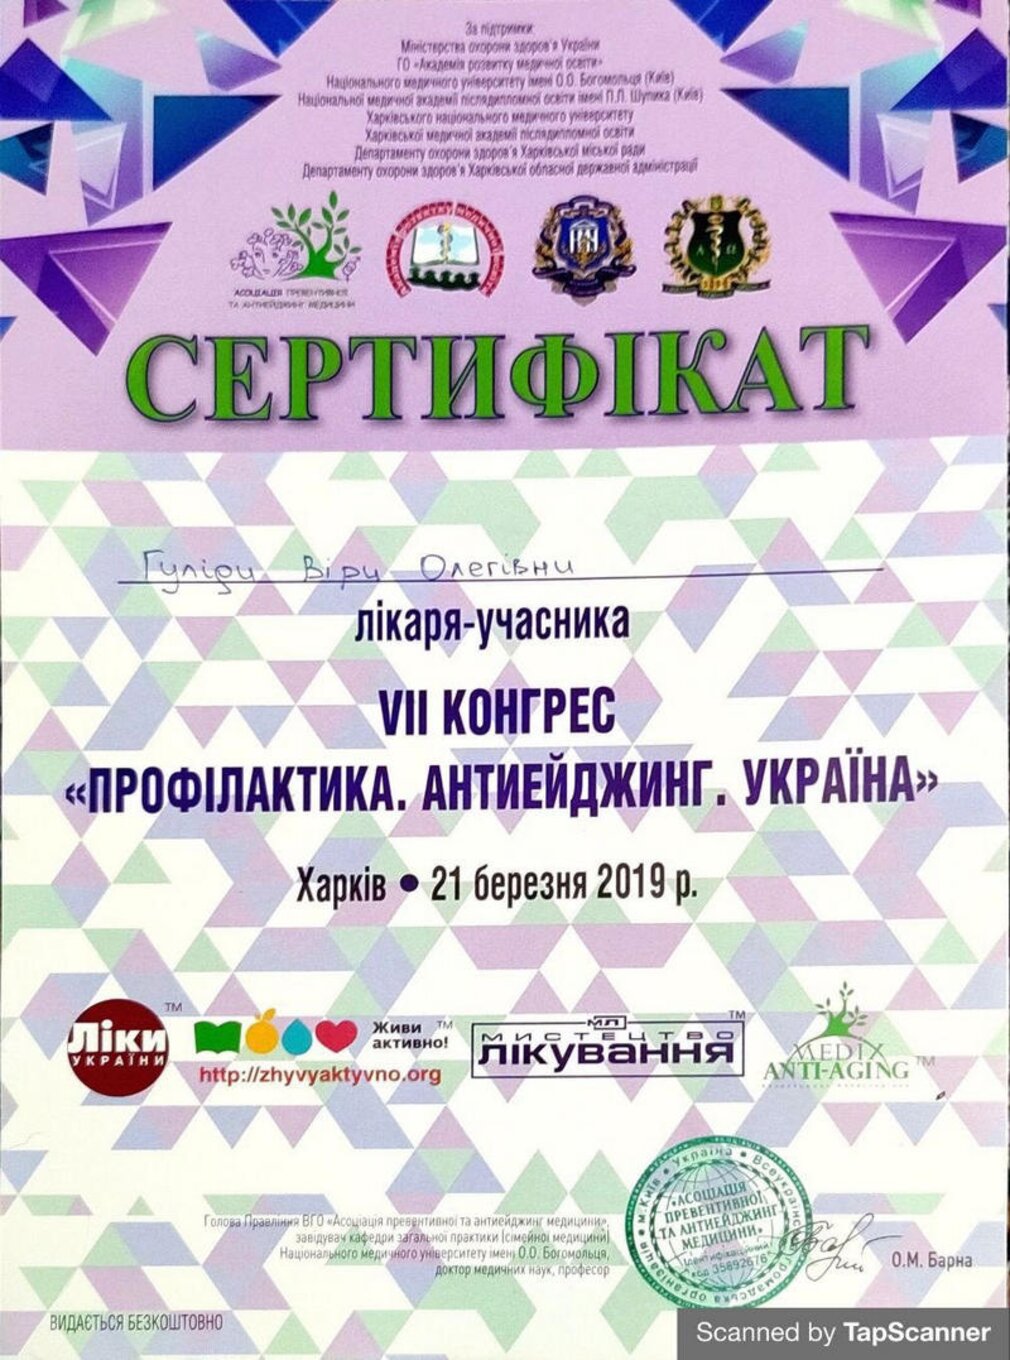 certificates/gulida-vira-olegivna/erc-cert-gulida-14.jpg